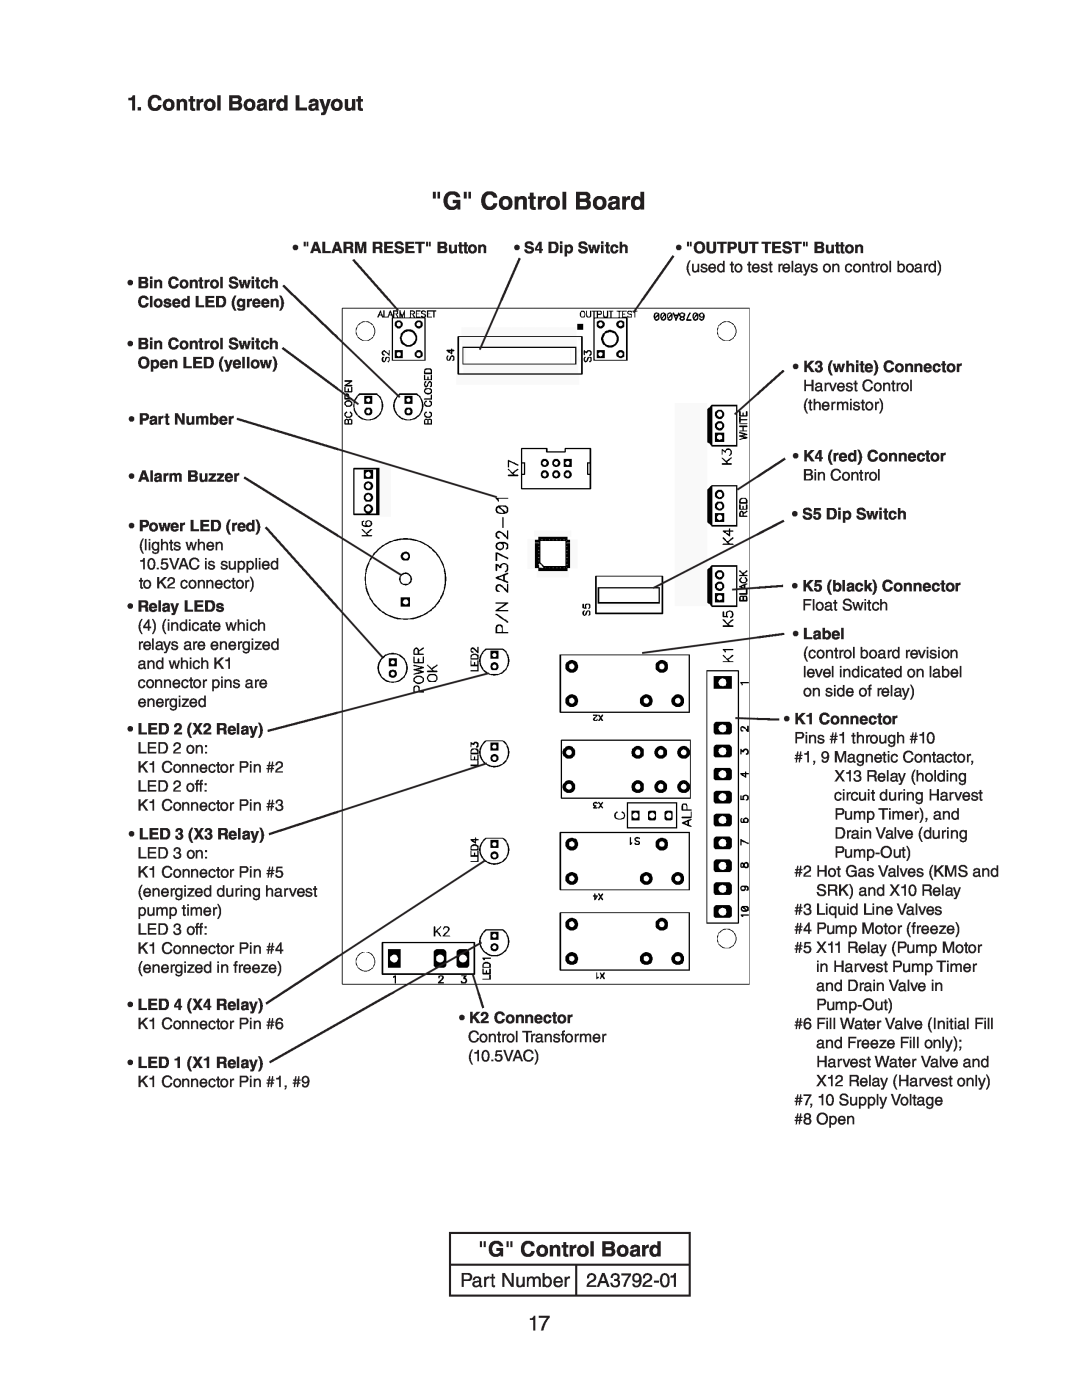 Hoshizaki Condensing Unit Models SRK-14J/3, KMS-1401MLJ G Control Board, Control Board Layout, Part Number 2A3792-01 